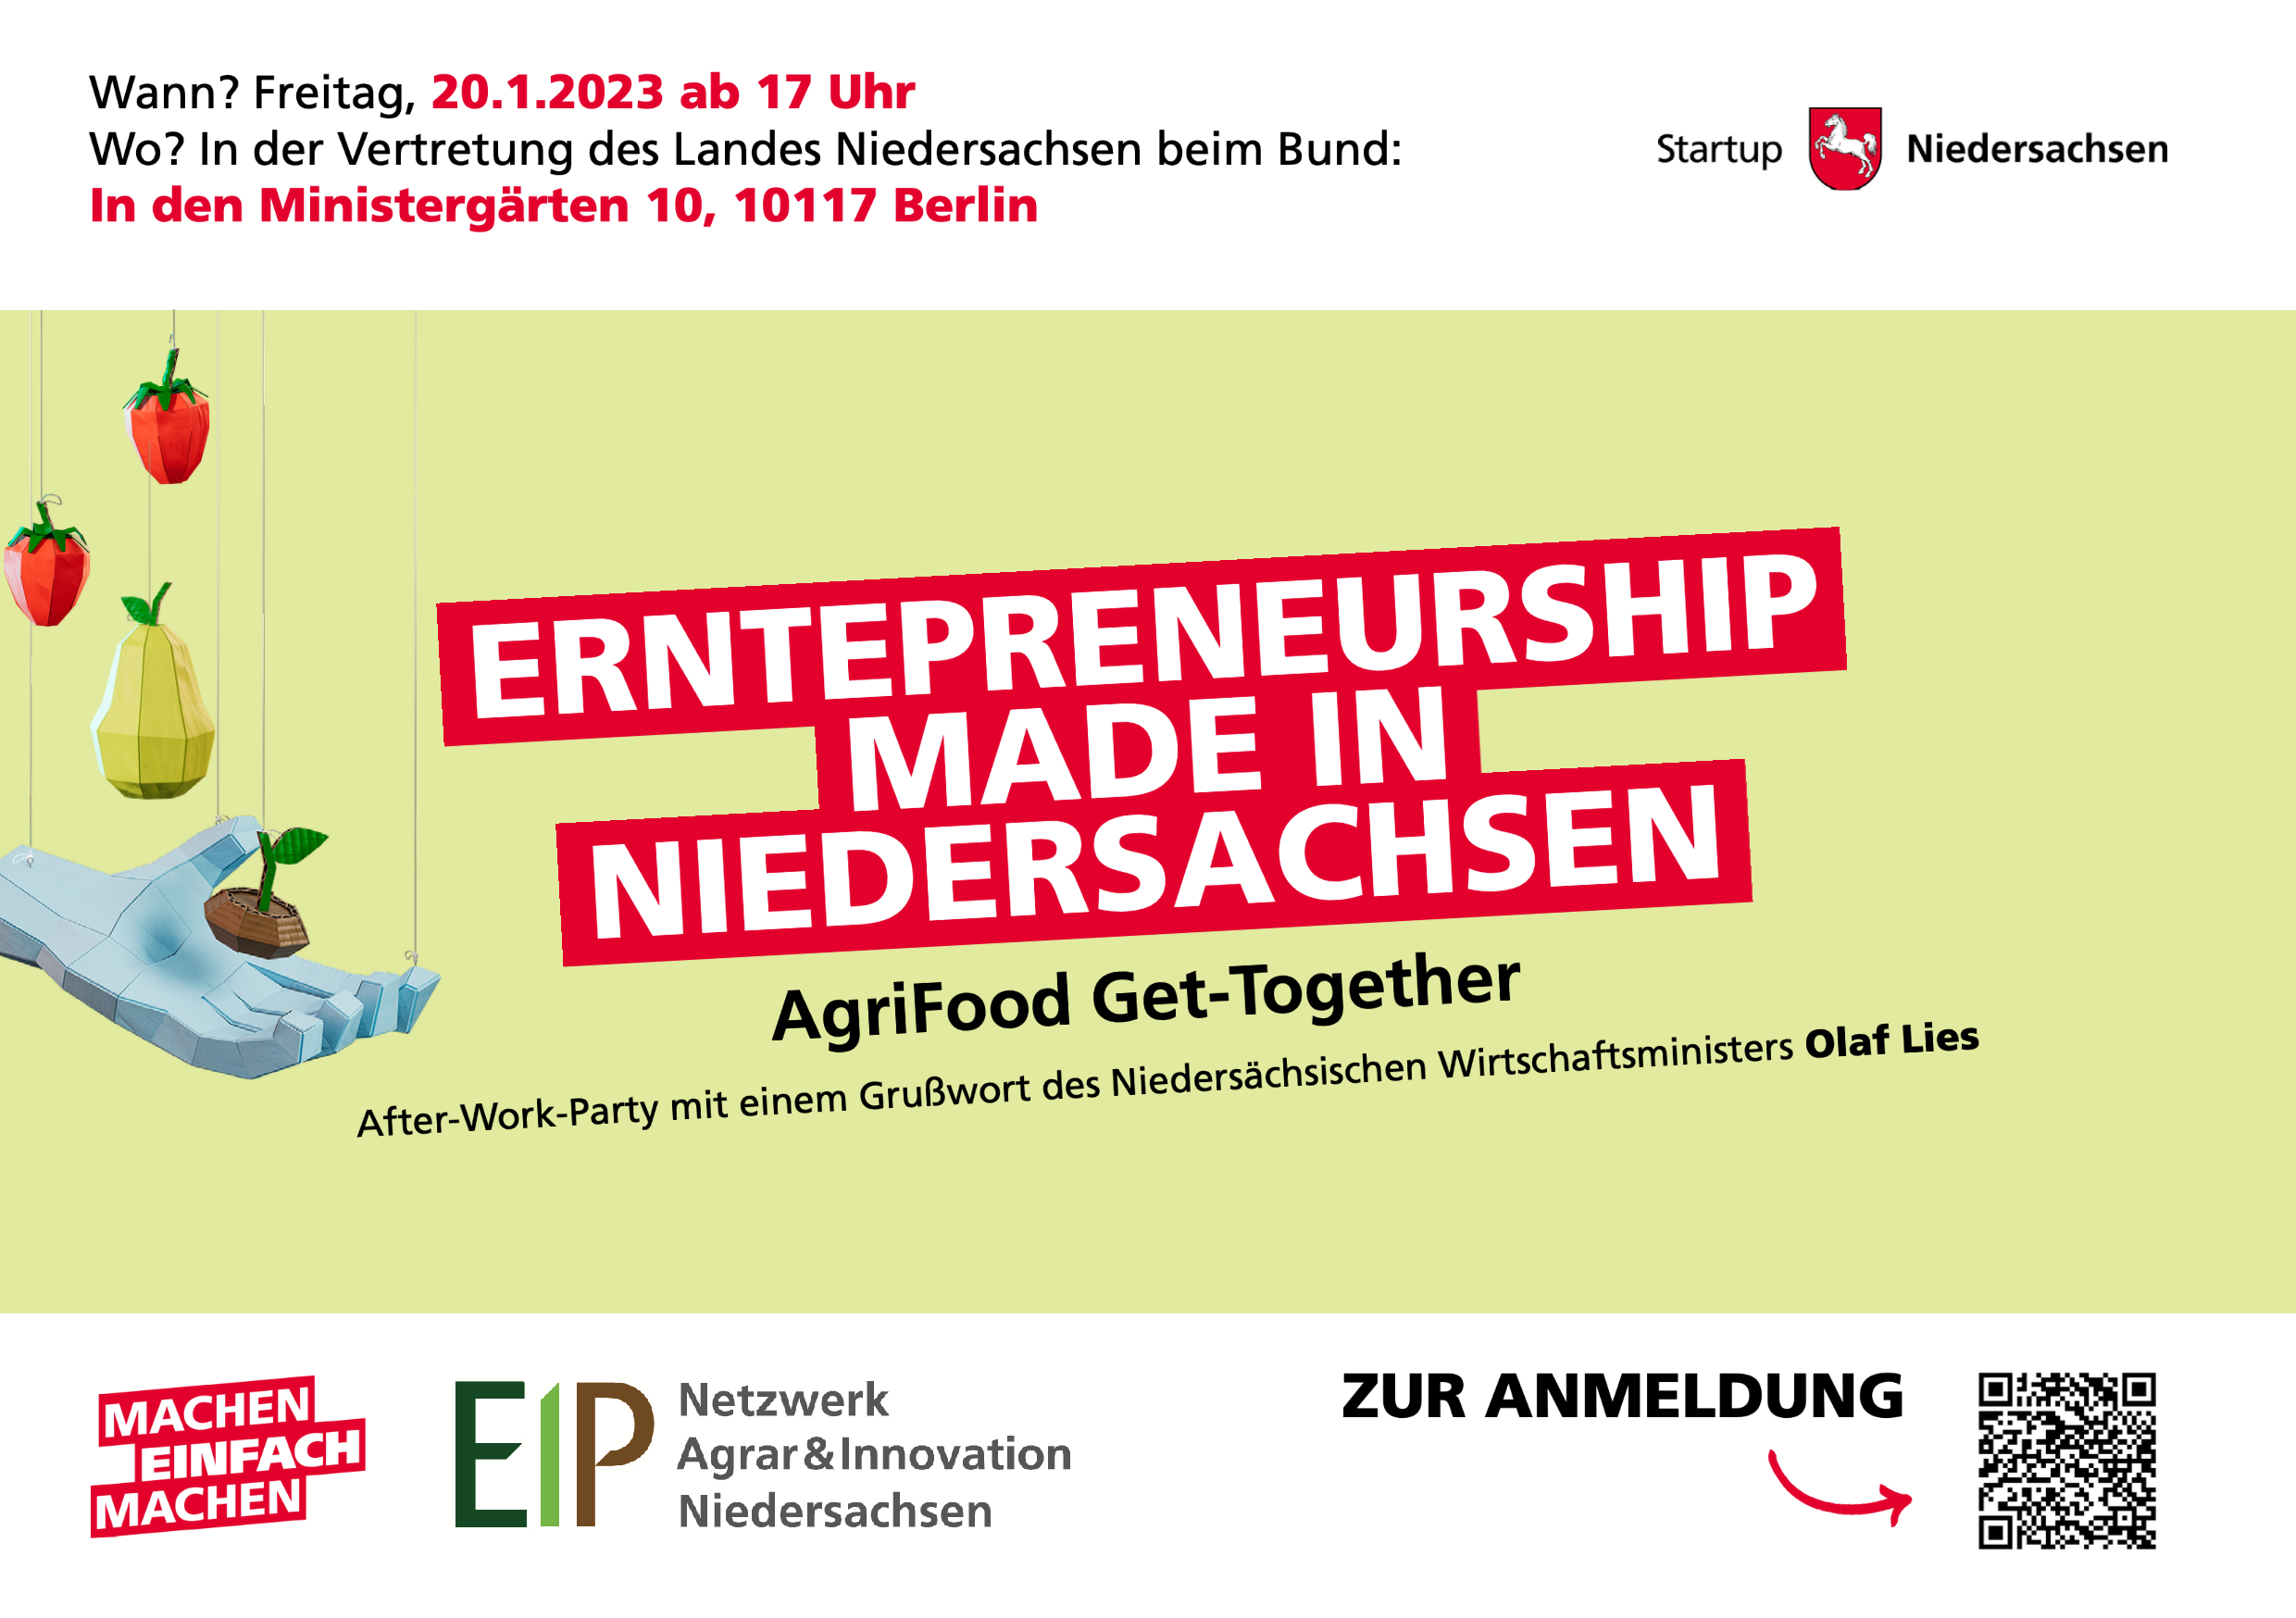 AgriFood Get-Together: Erntepreneurship made in Niedersachsen